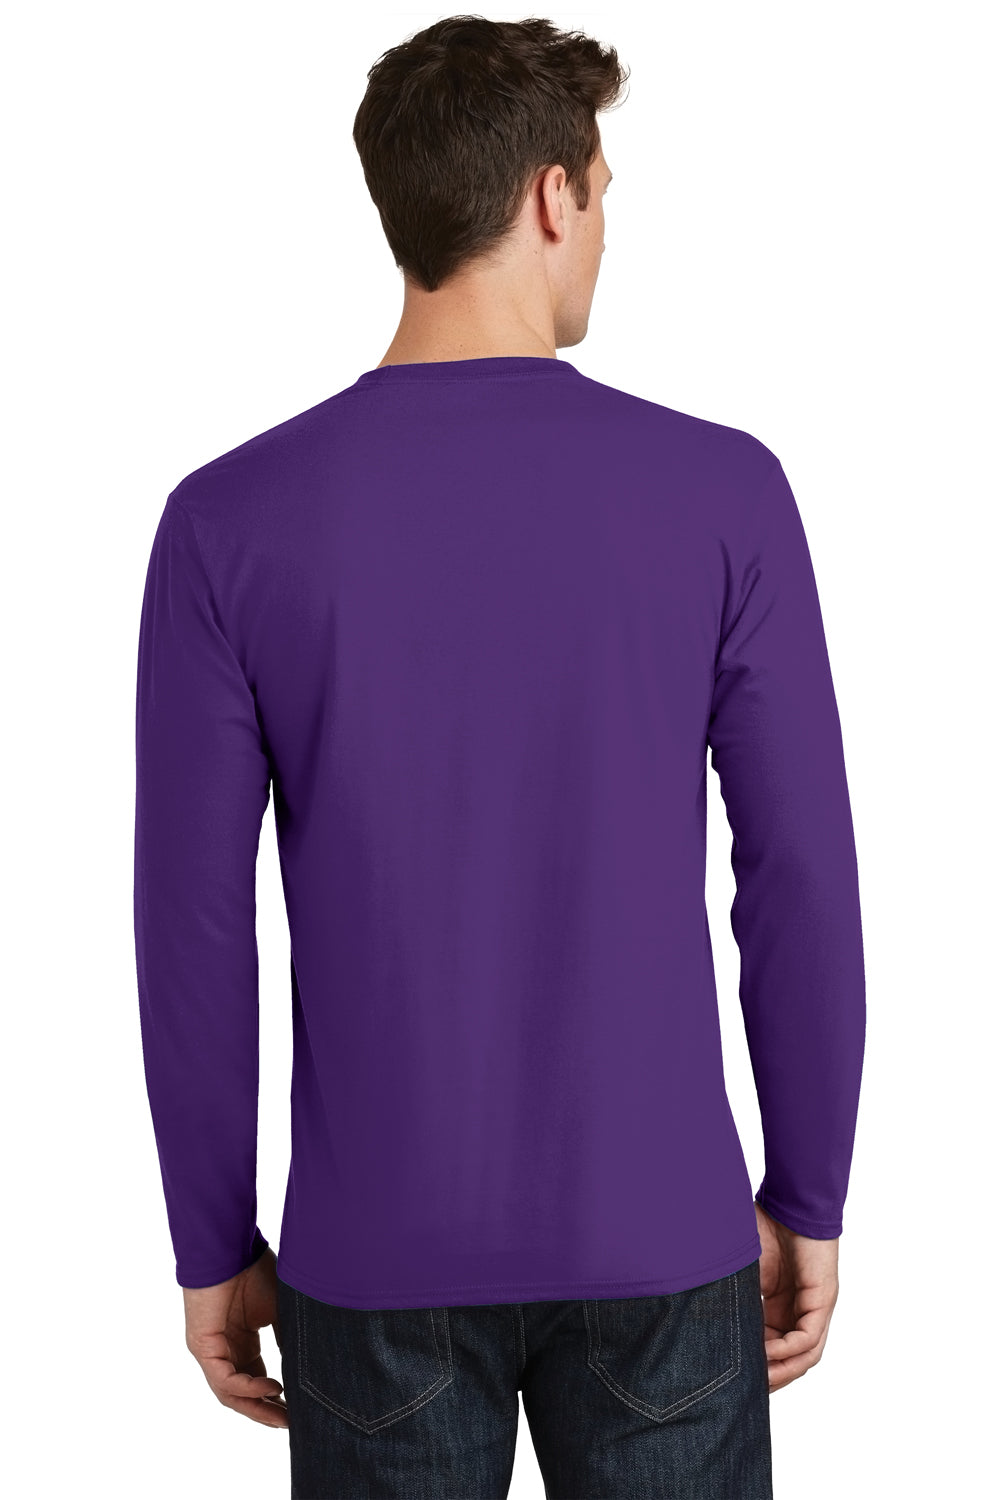 Port & Company PC450LS Mens Fan Favorite Long Sleeve Crewneck T-Shirt Purple Back